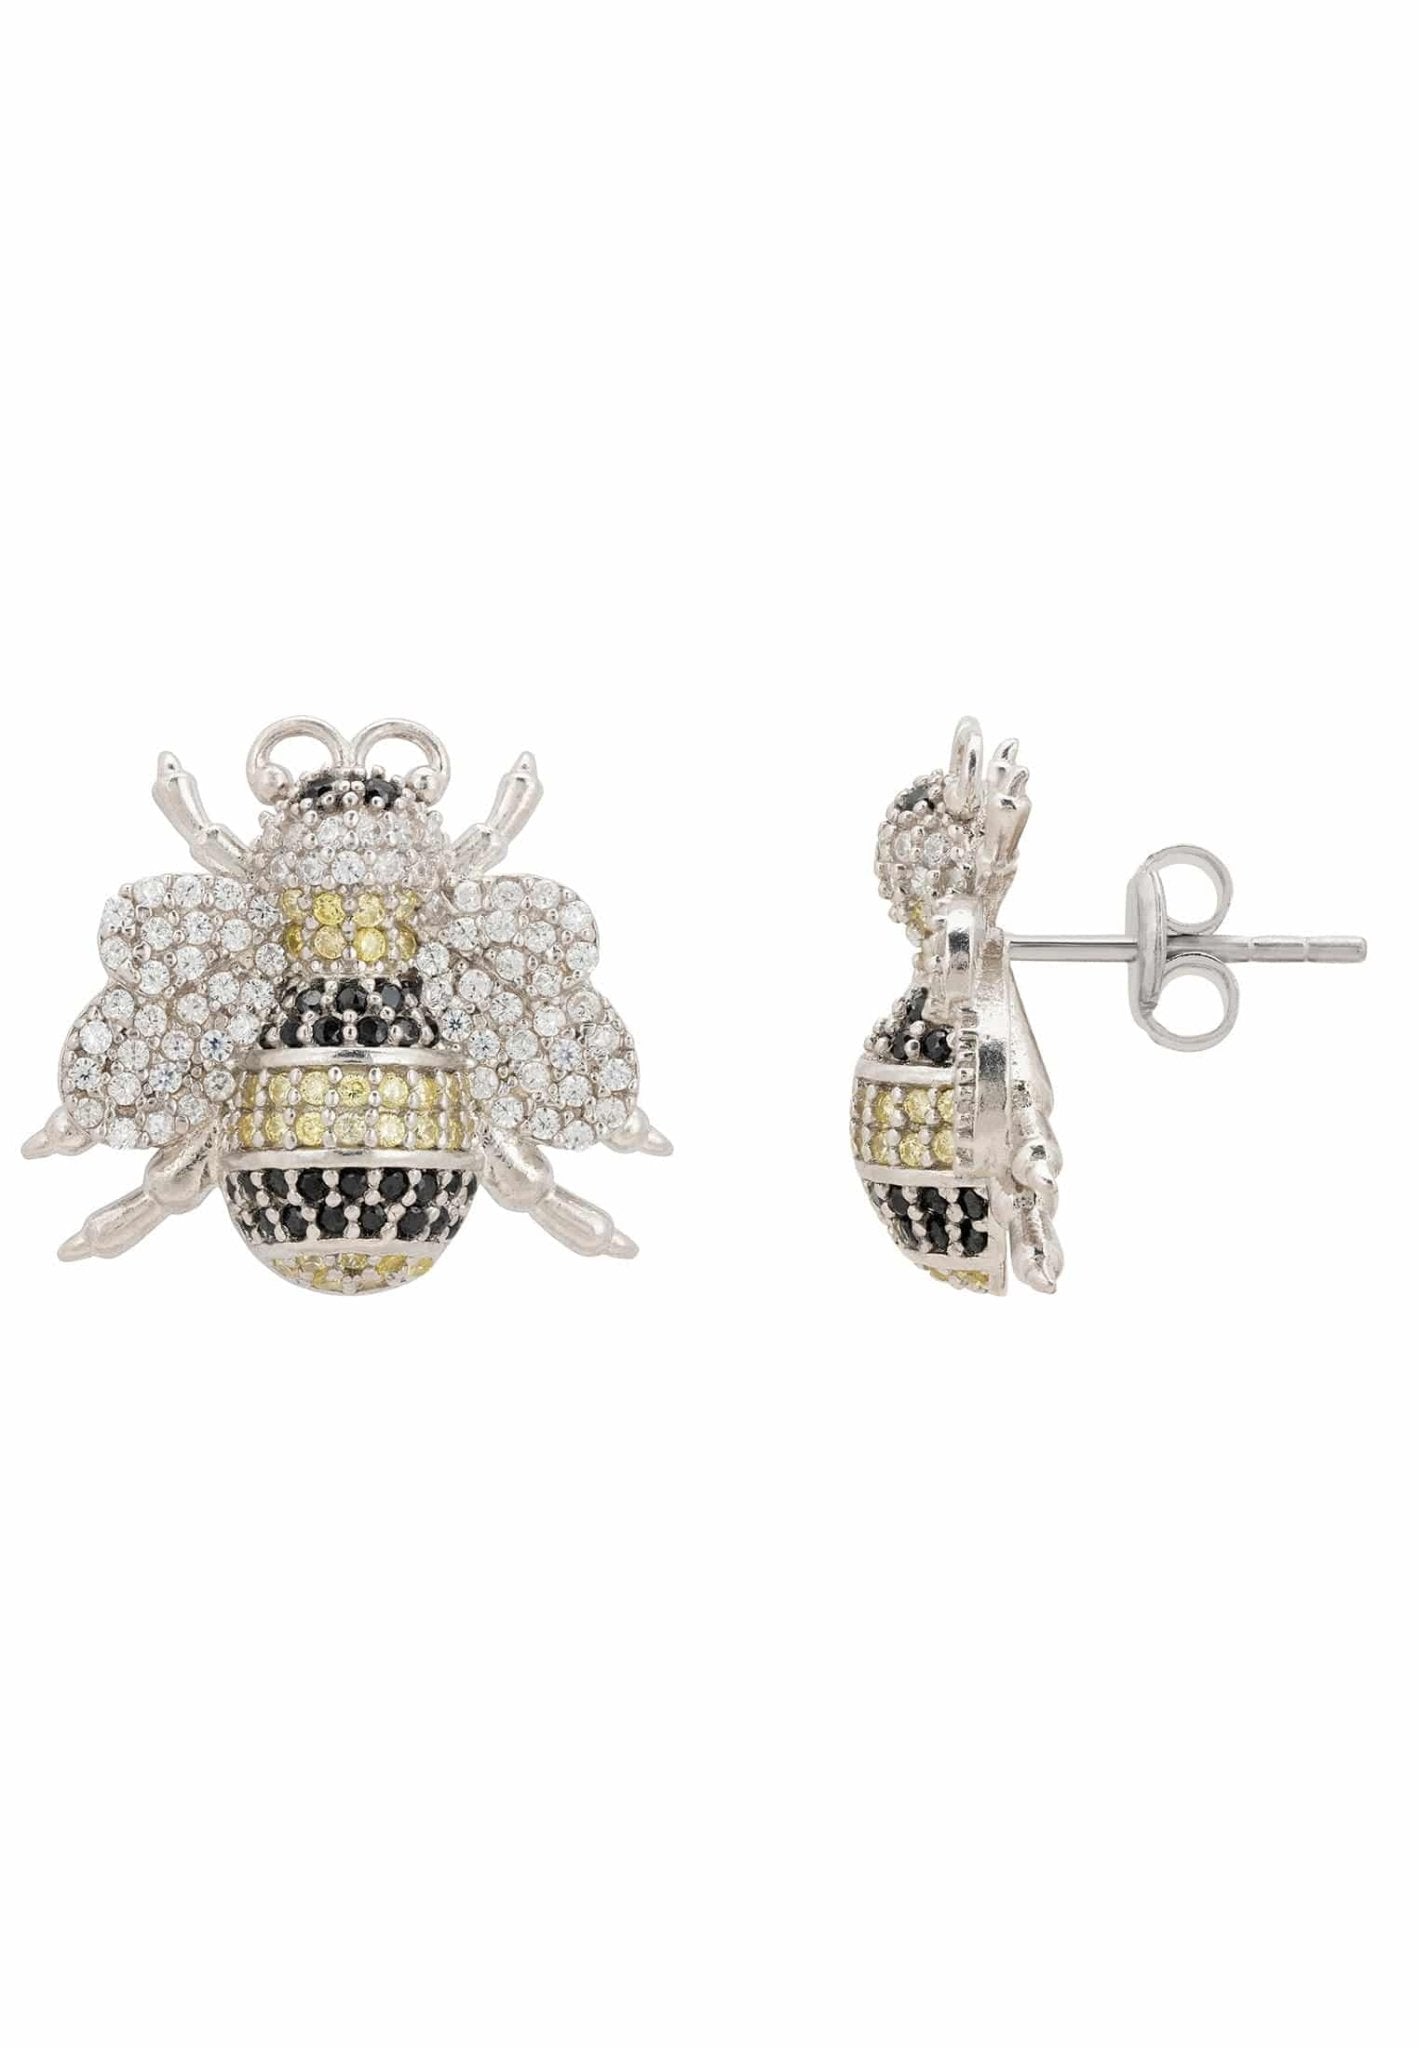 Bumble Bee Stud Earrings Silver - LATELITA Earrings